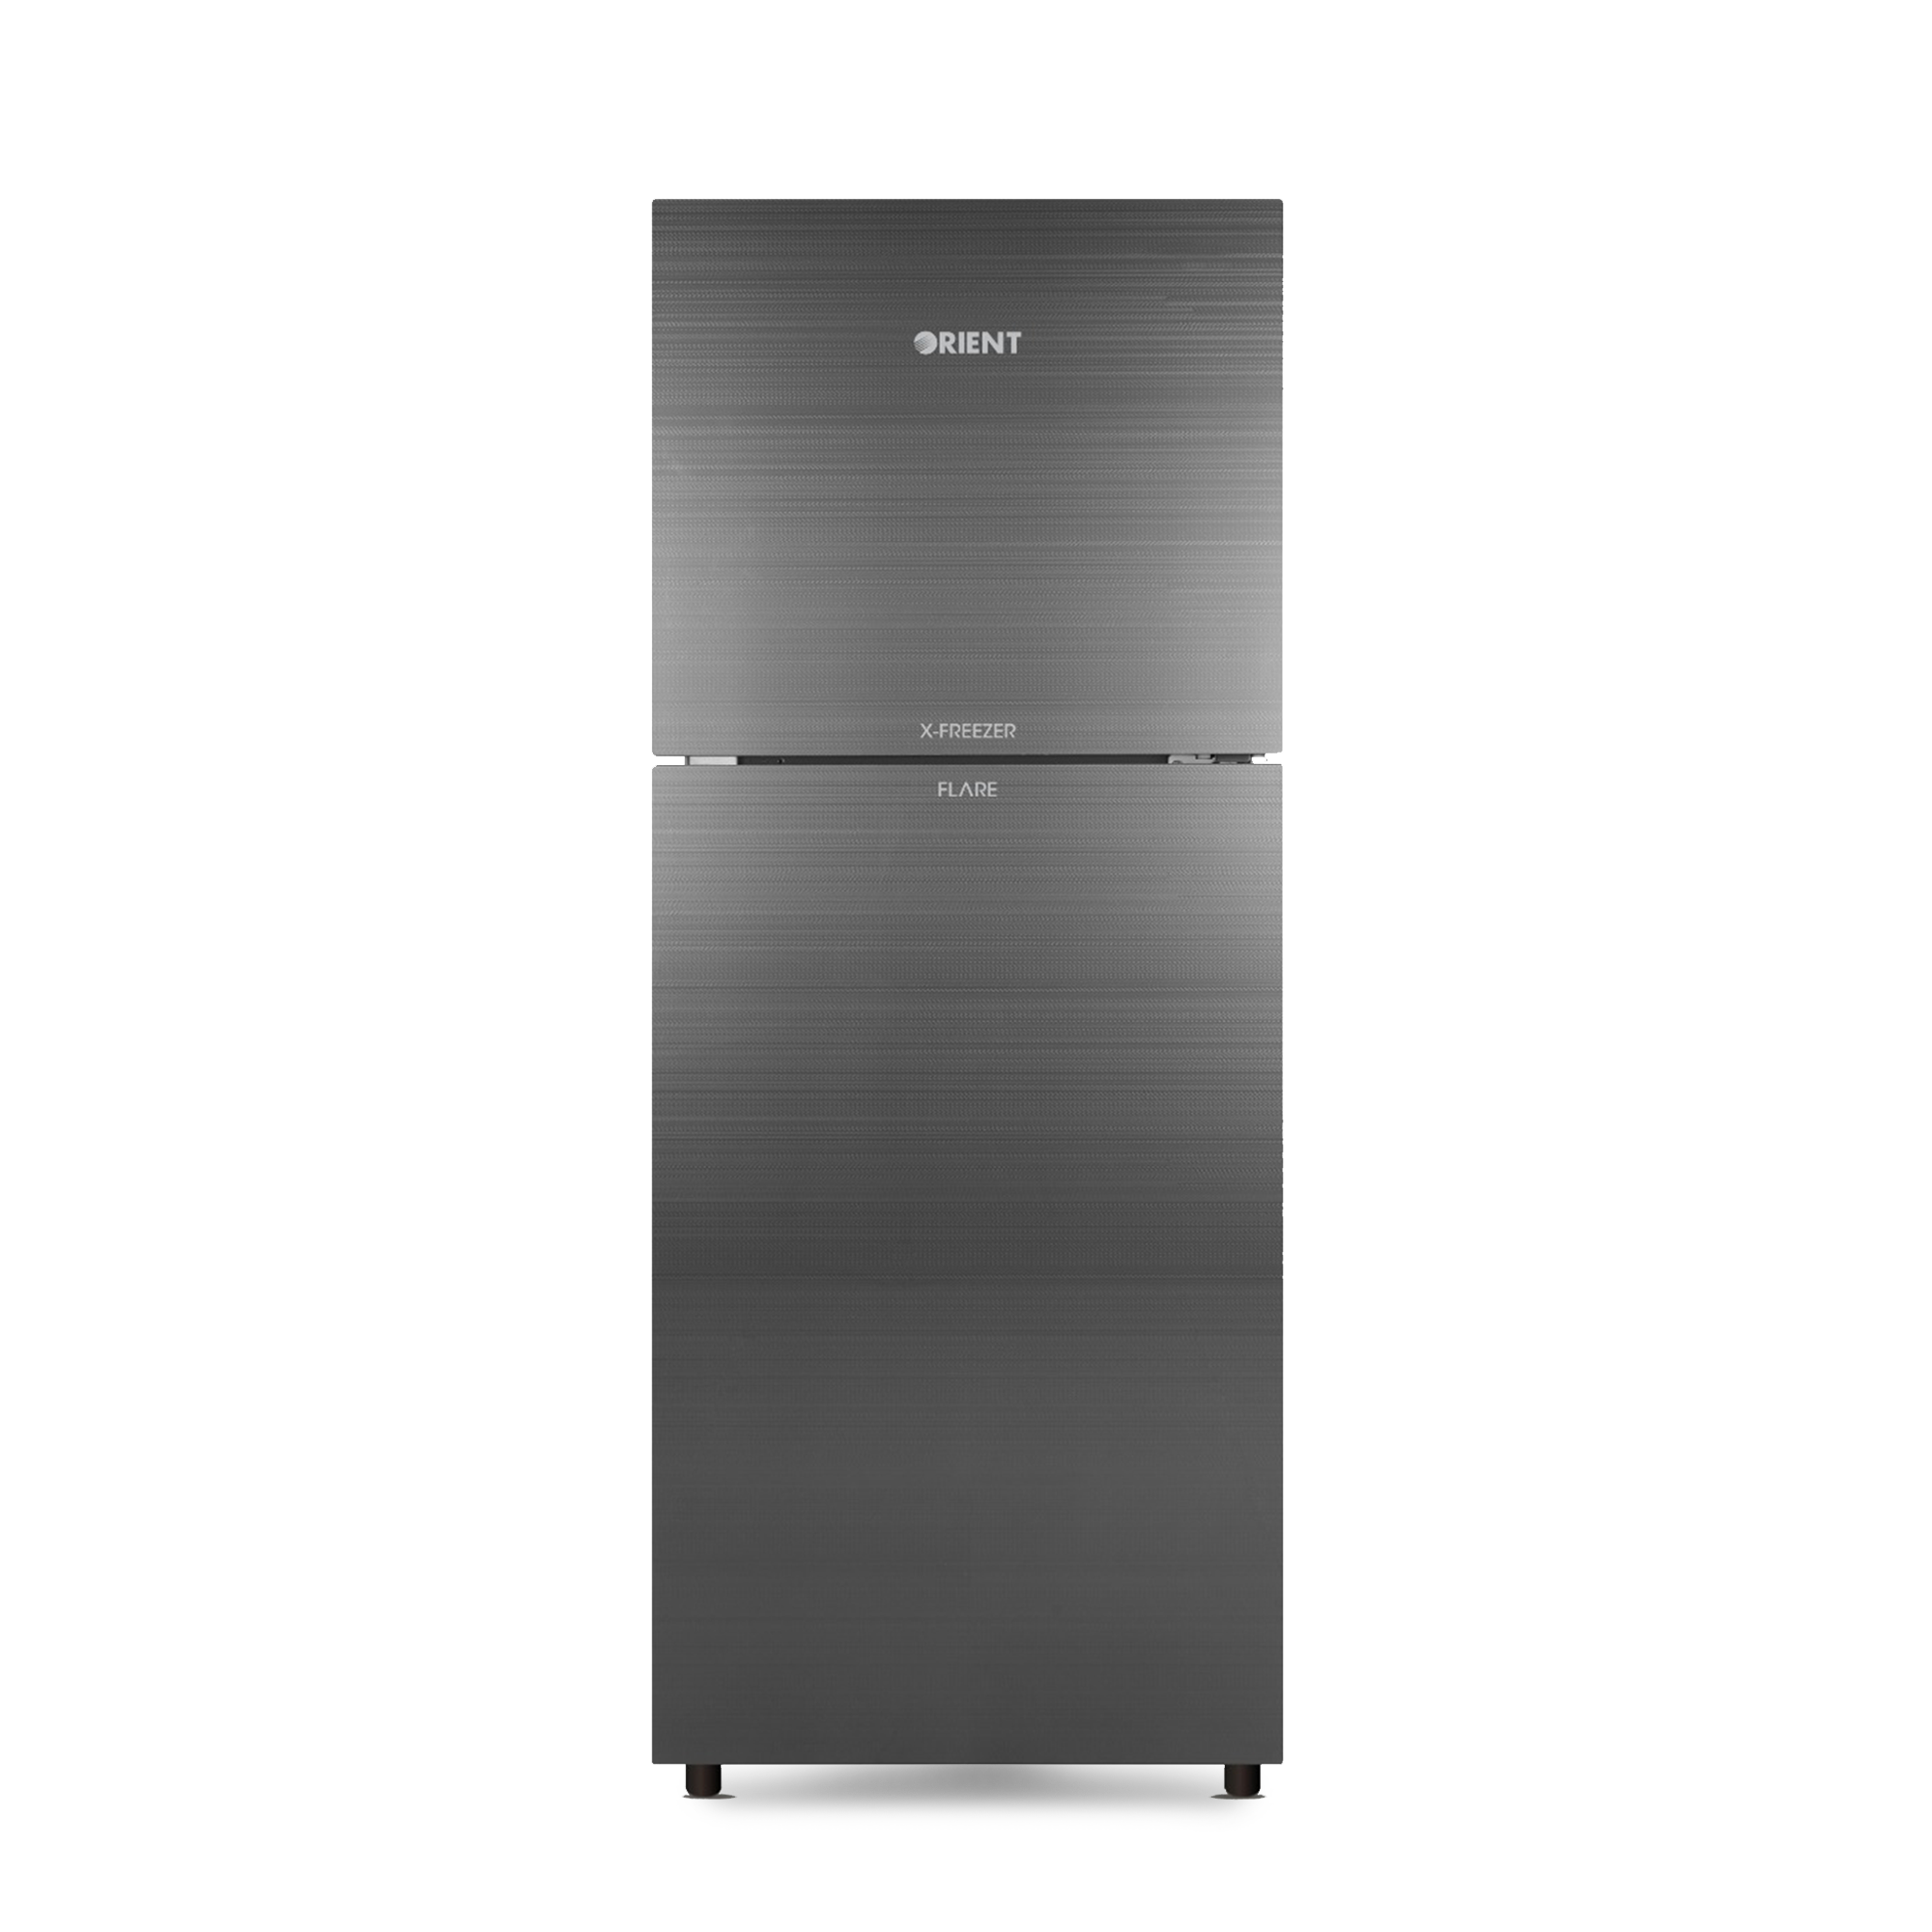 Flare 350 Liters Inverter Refrigerator